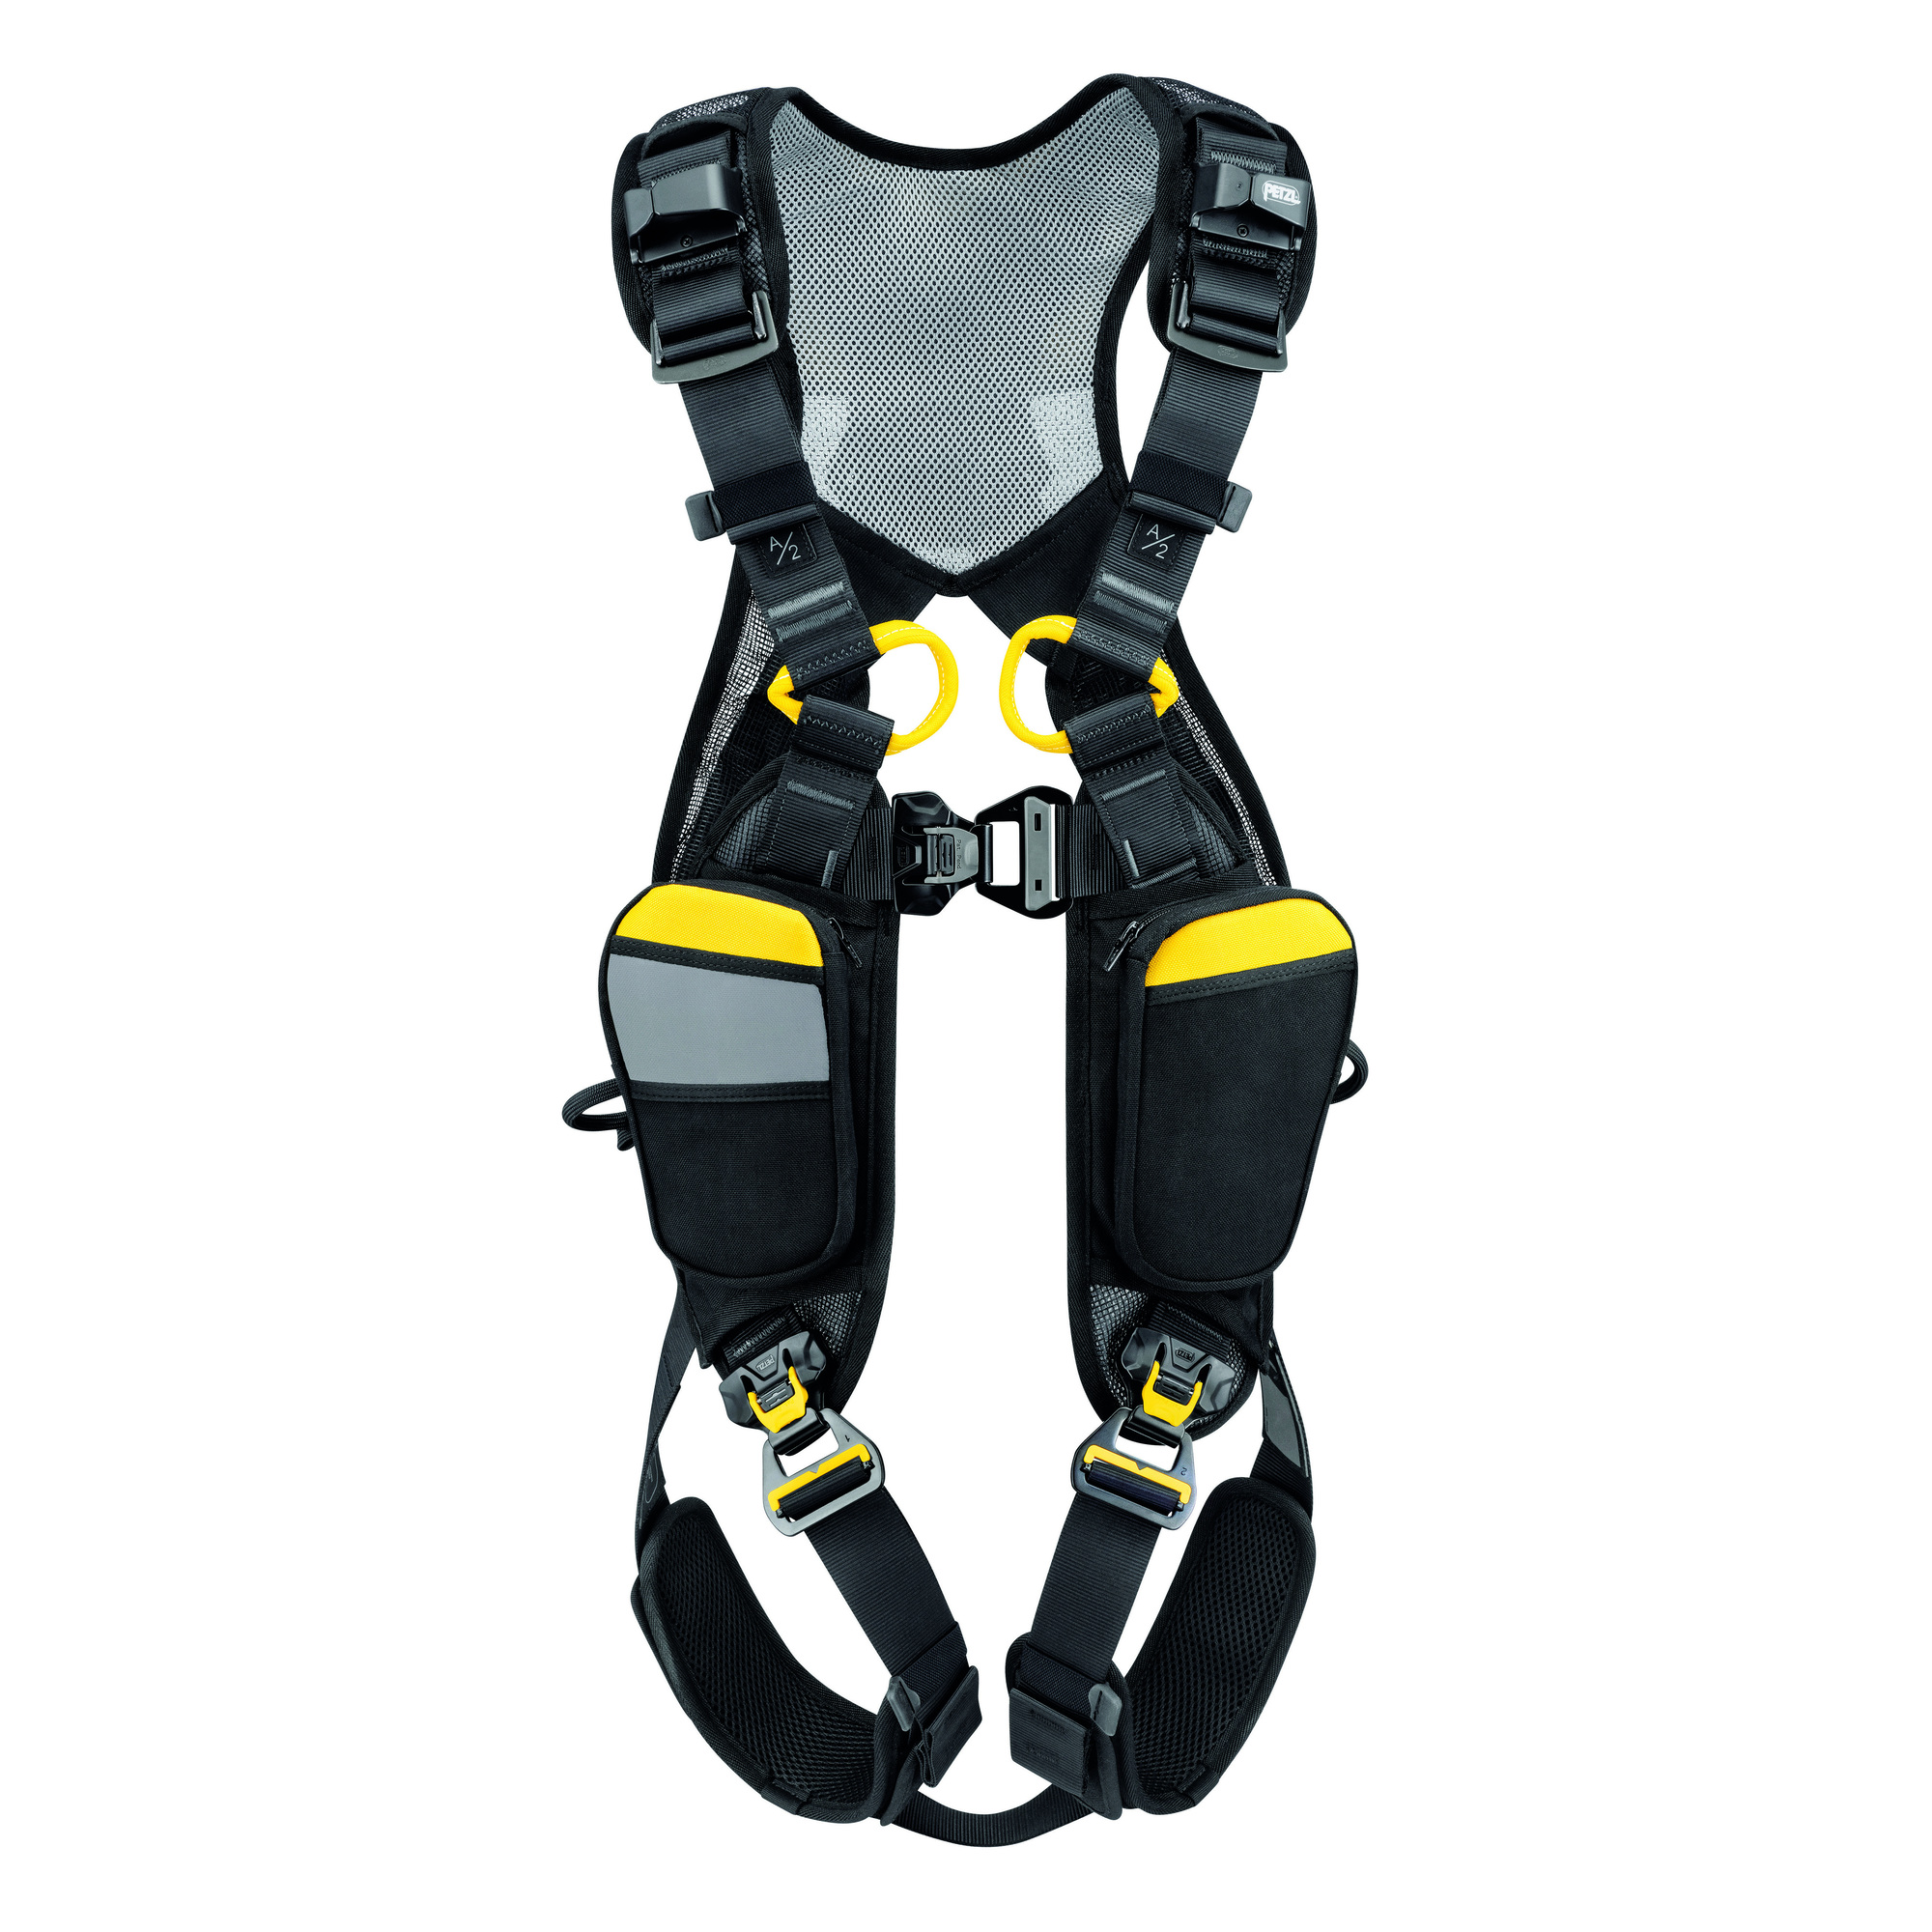 Petzl, NEWTON EASYFIT full body harness ANSI CSA sz2 Weight Capacity 310 lb, Harness Size L, Model C073FA02